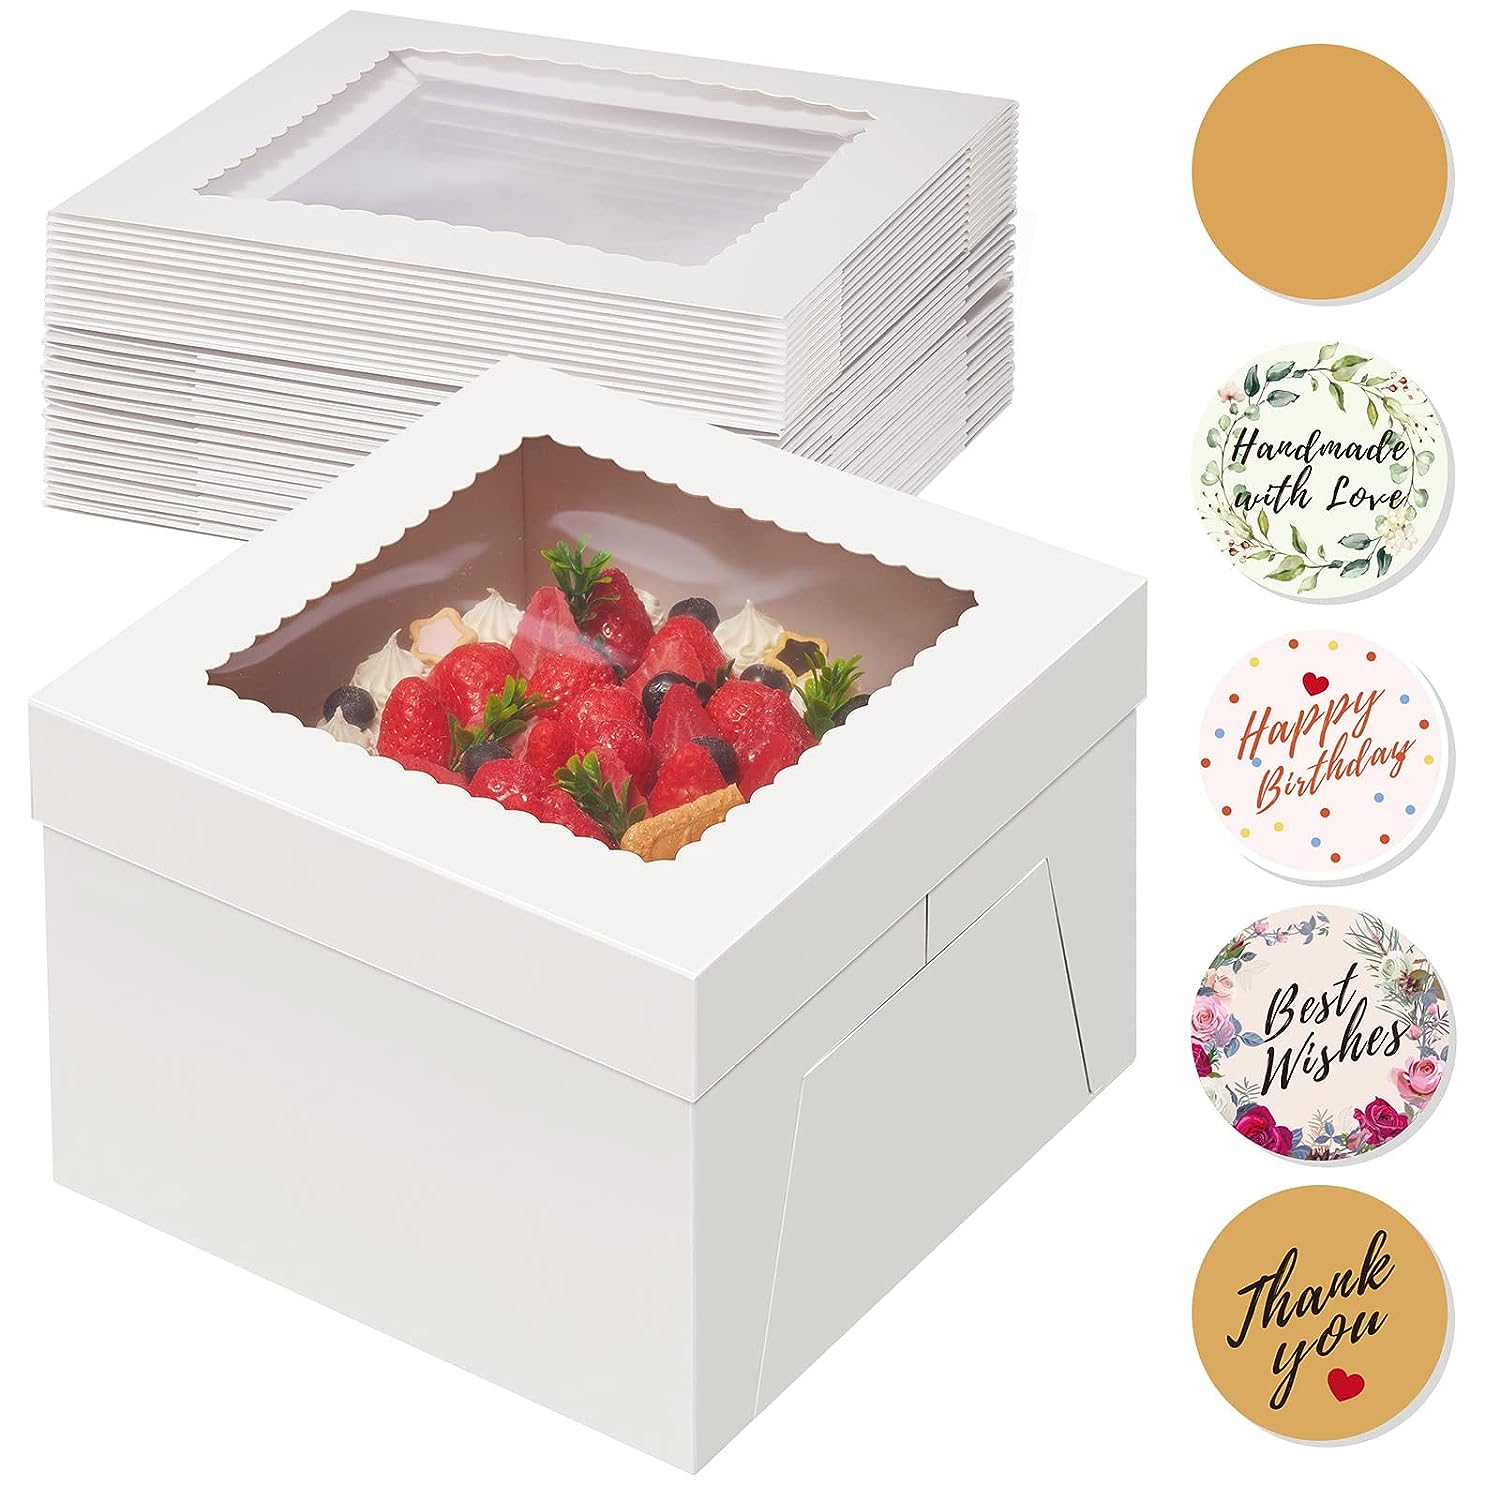 Kootek 96PCs Cake Decorating Supplies Kits with Ebook, Cake Turntable